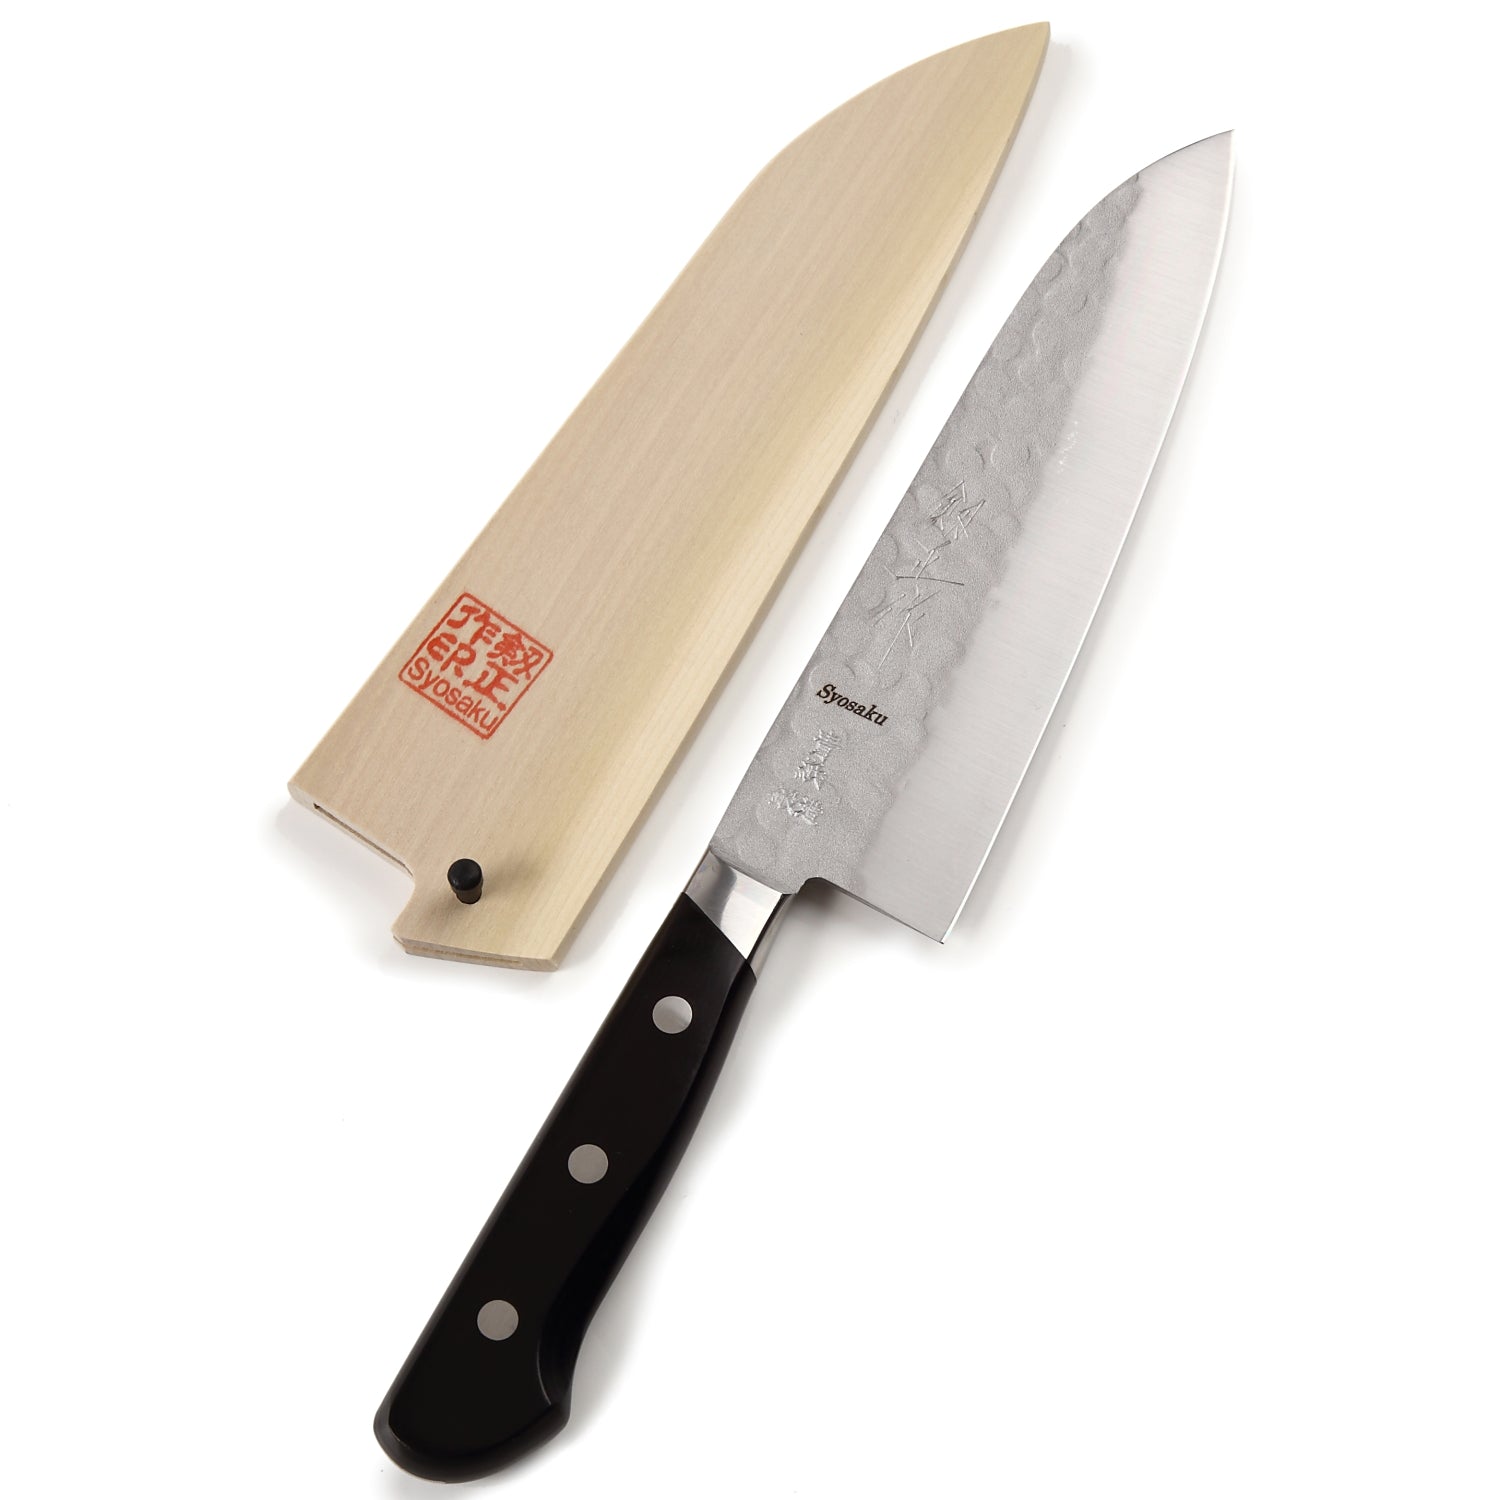 Syosaku Japanese Multi Purpose Best Sharp Kitchen Chef Knife Aoko(Blue Steel)-No.2 Pakkawood Handle, Santoku 7-inch (180mm) with Magnolia Sheath Saya - Syosaku-Japan